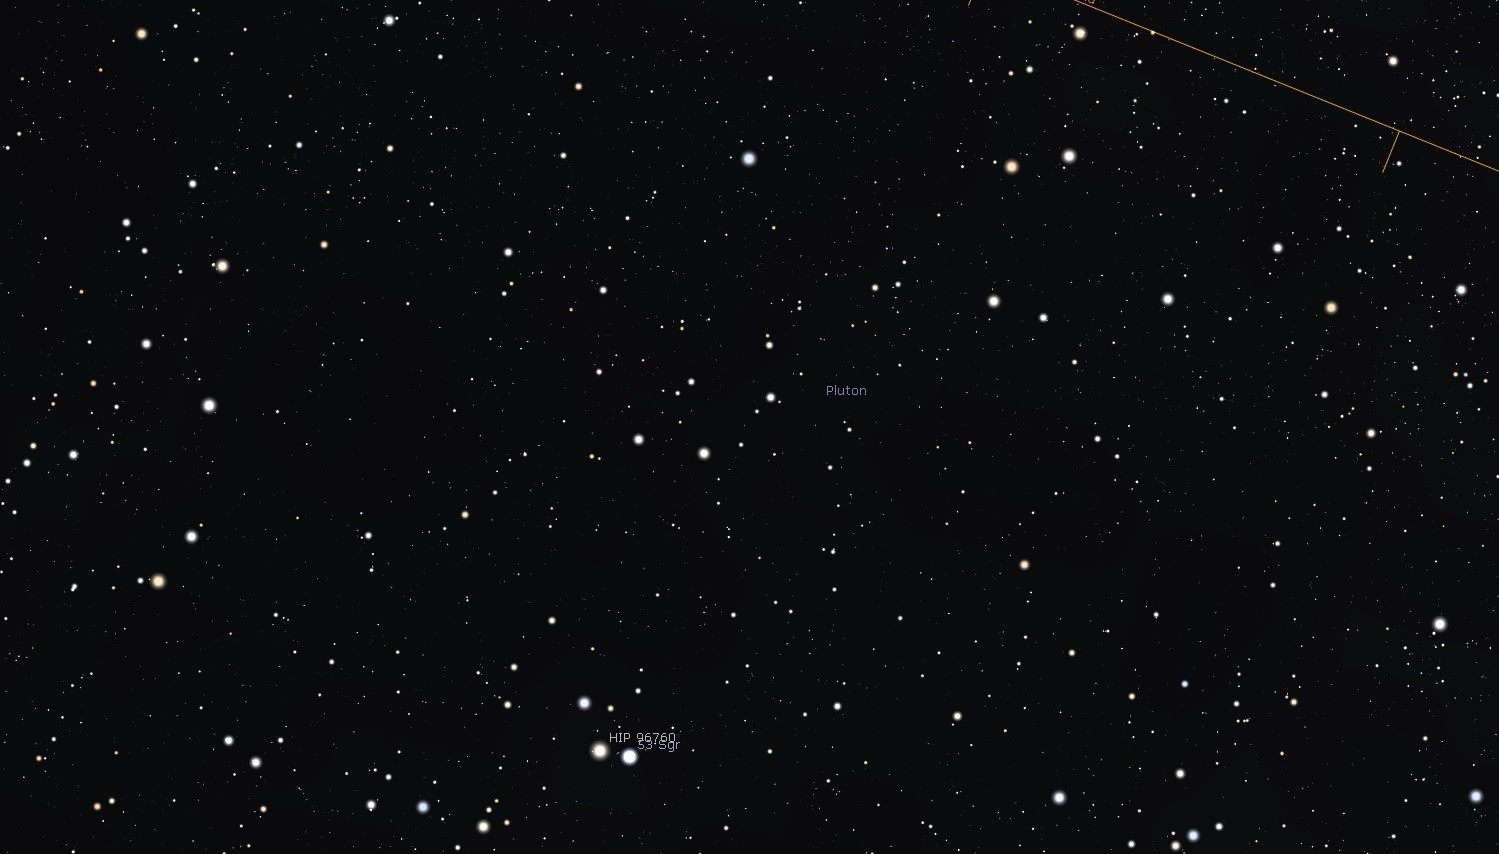 Pluton2020stellarium1.jpg